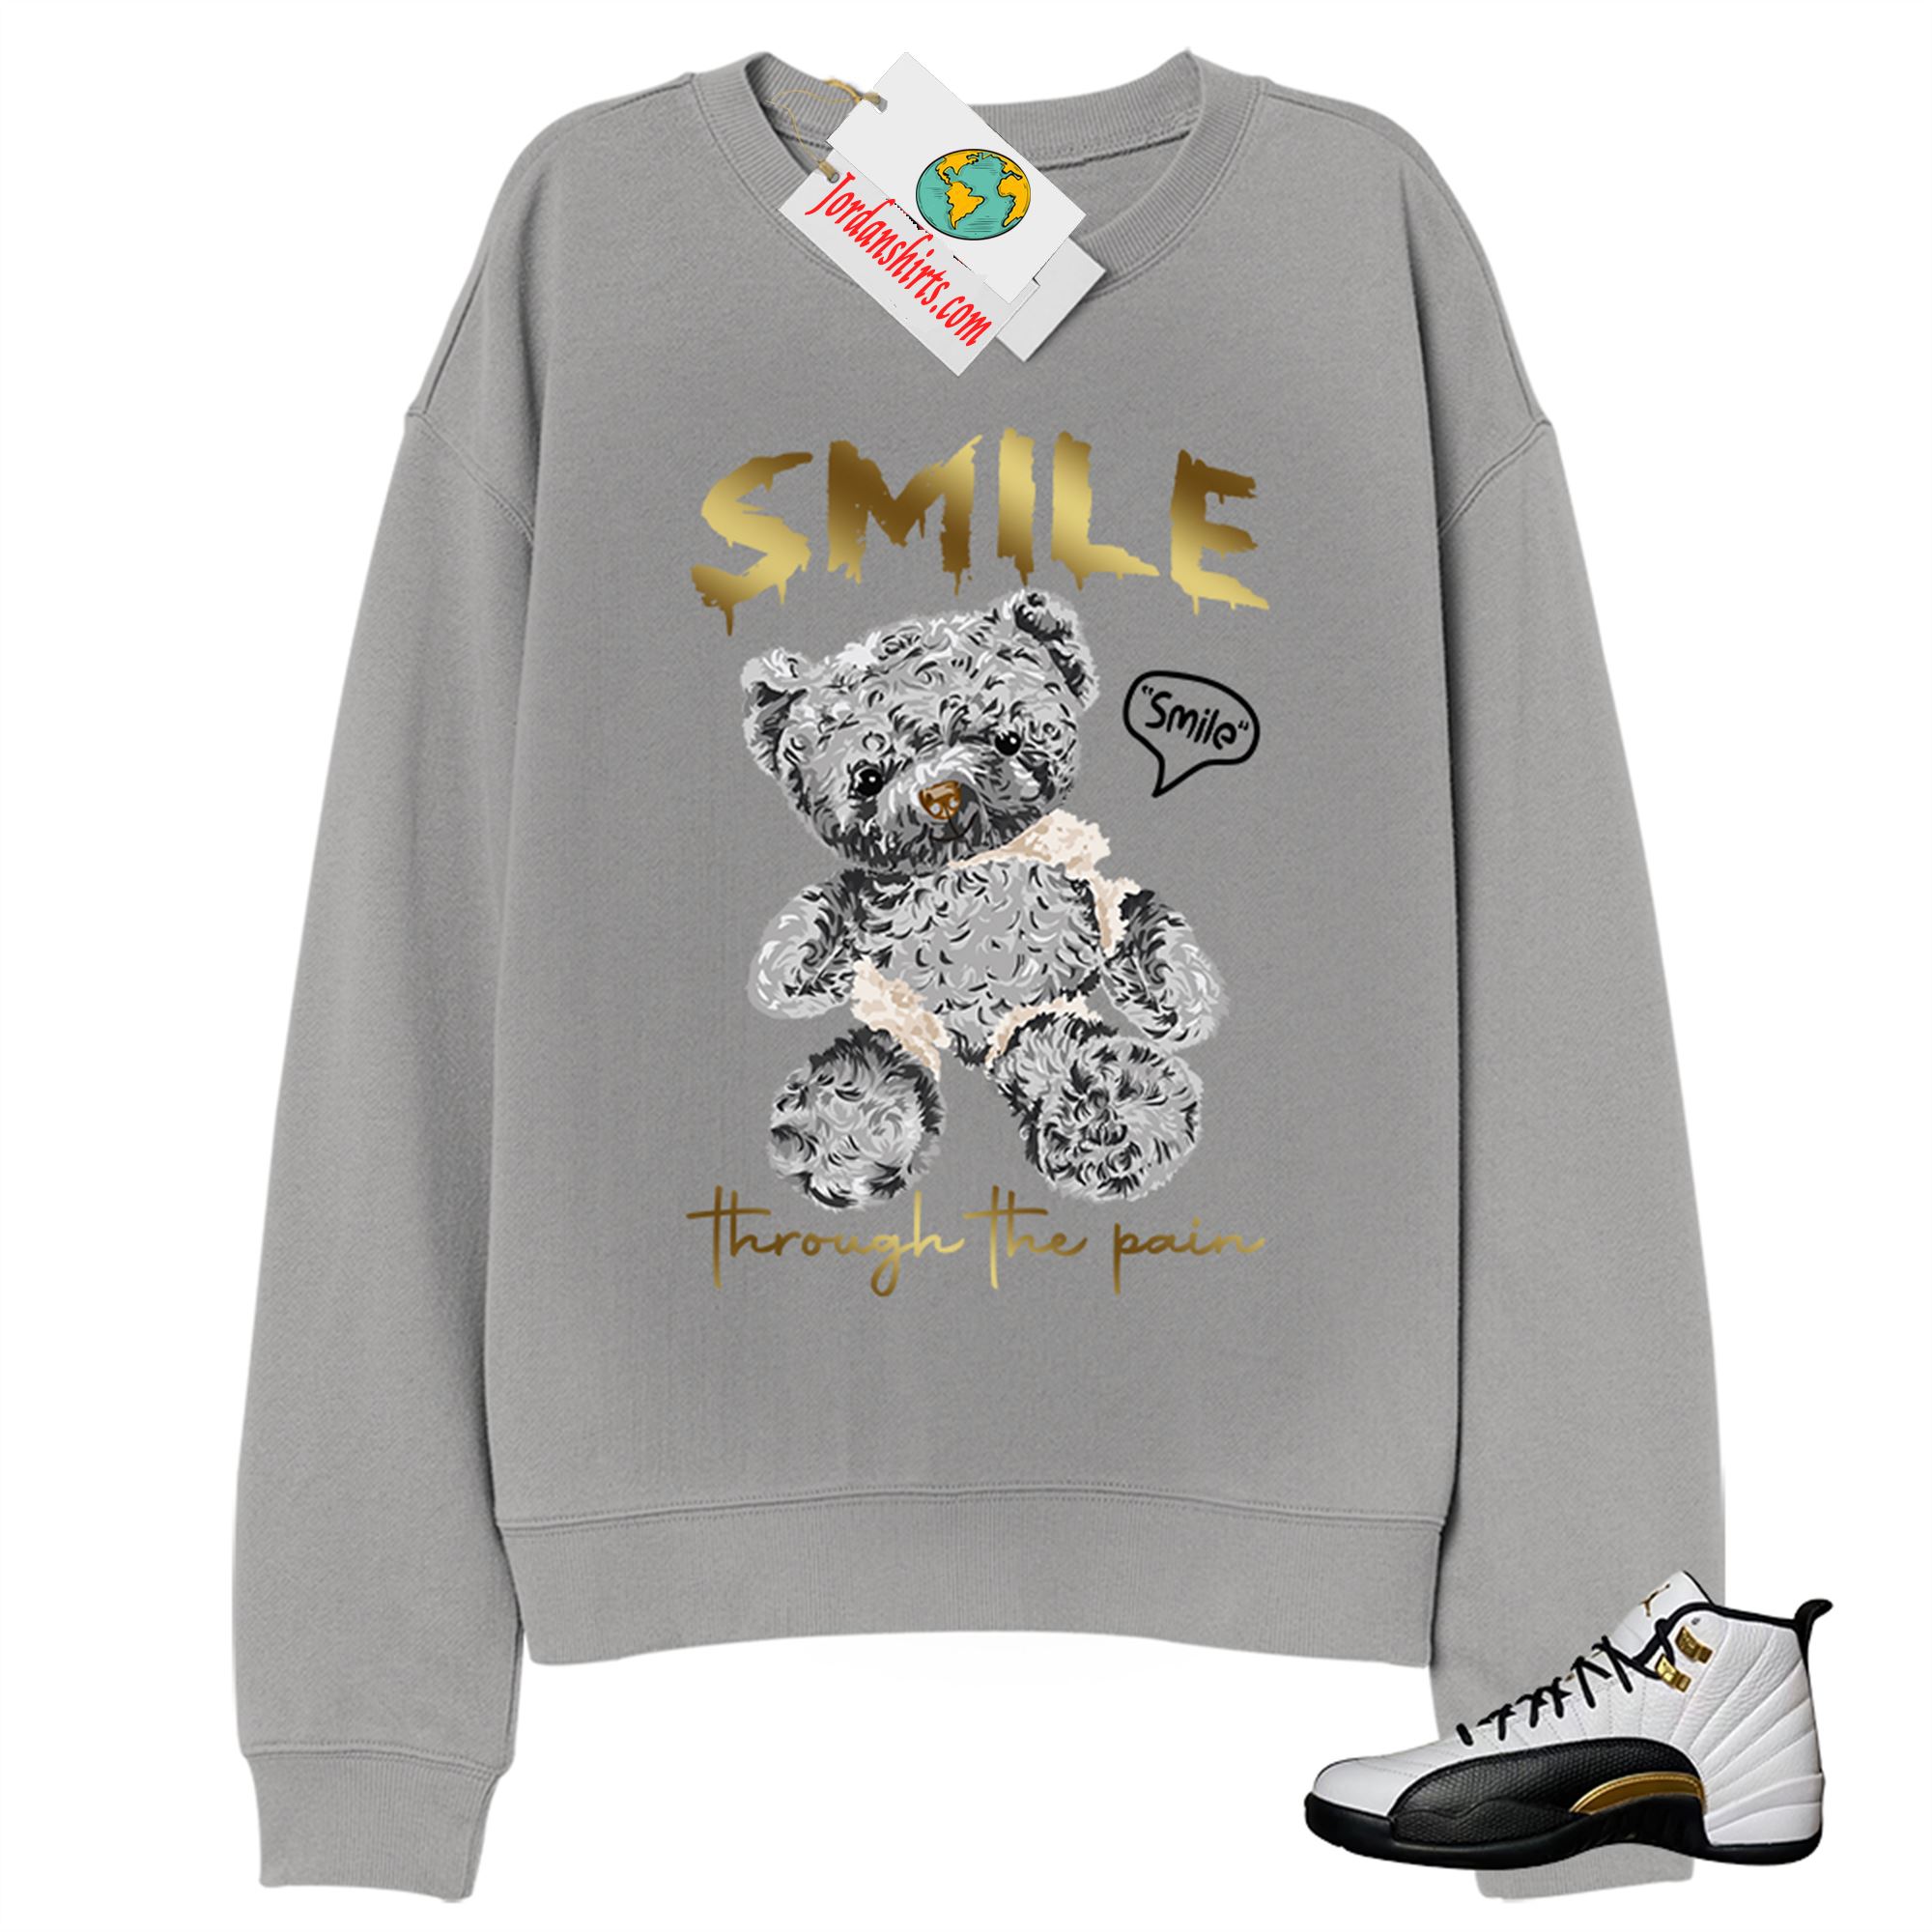 Jordan 12 Sweatshirt, Teddy Bear Smile Pain Grey Sweatshirt Air Jordan 12 Royalty 12s Full Size Up To 5xl